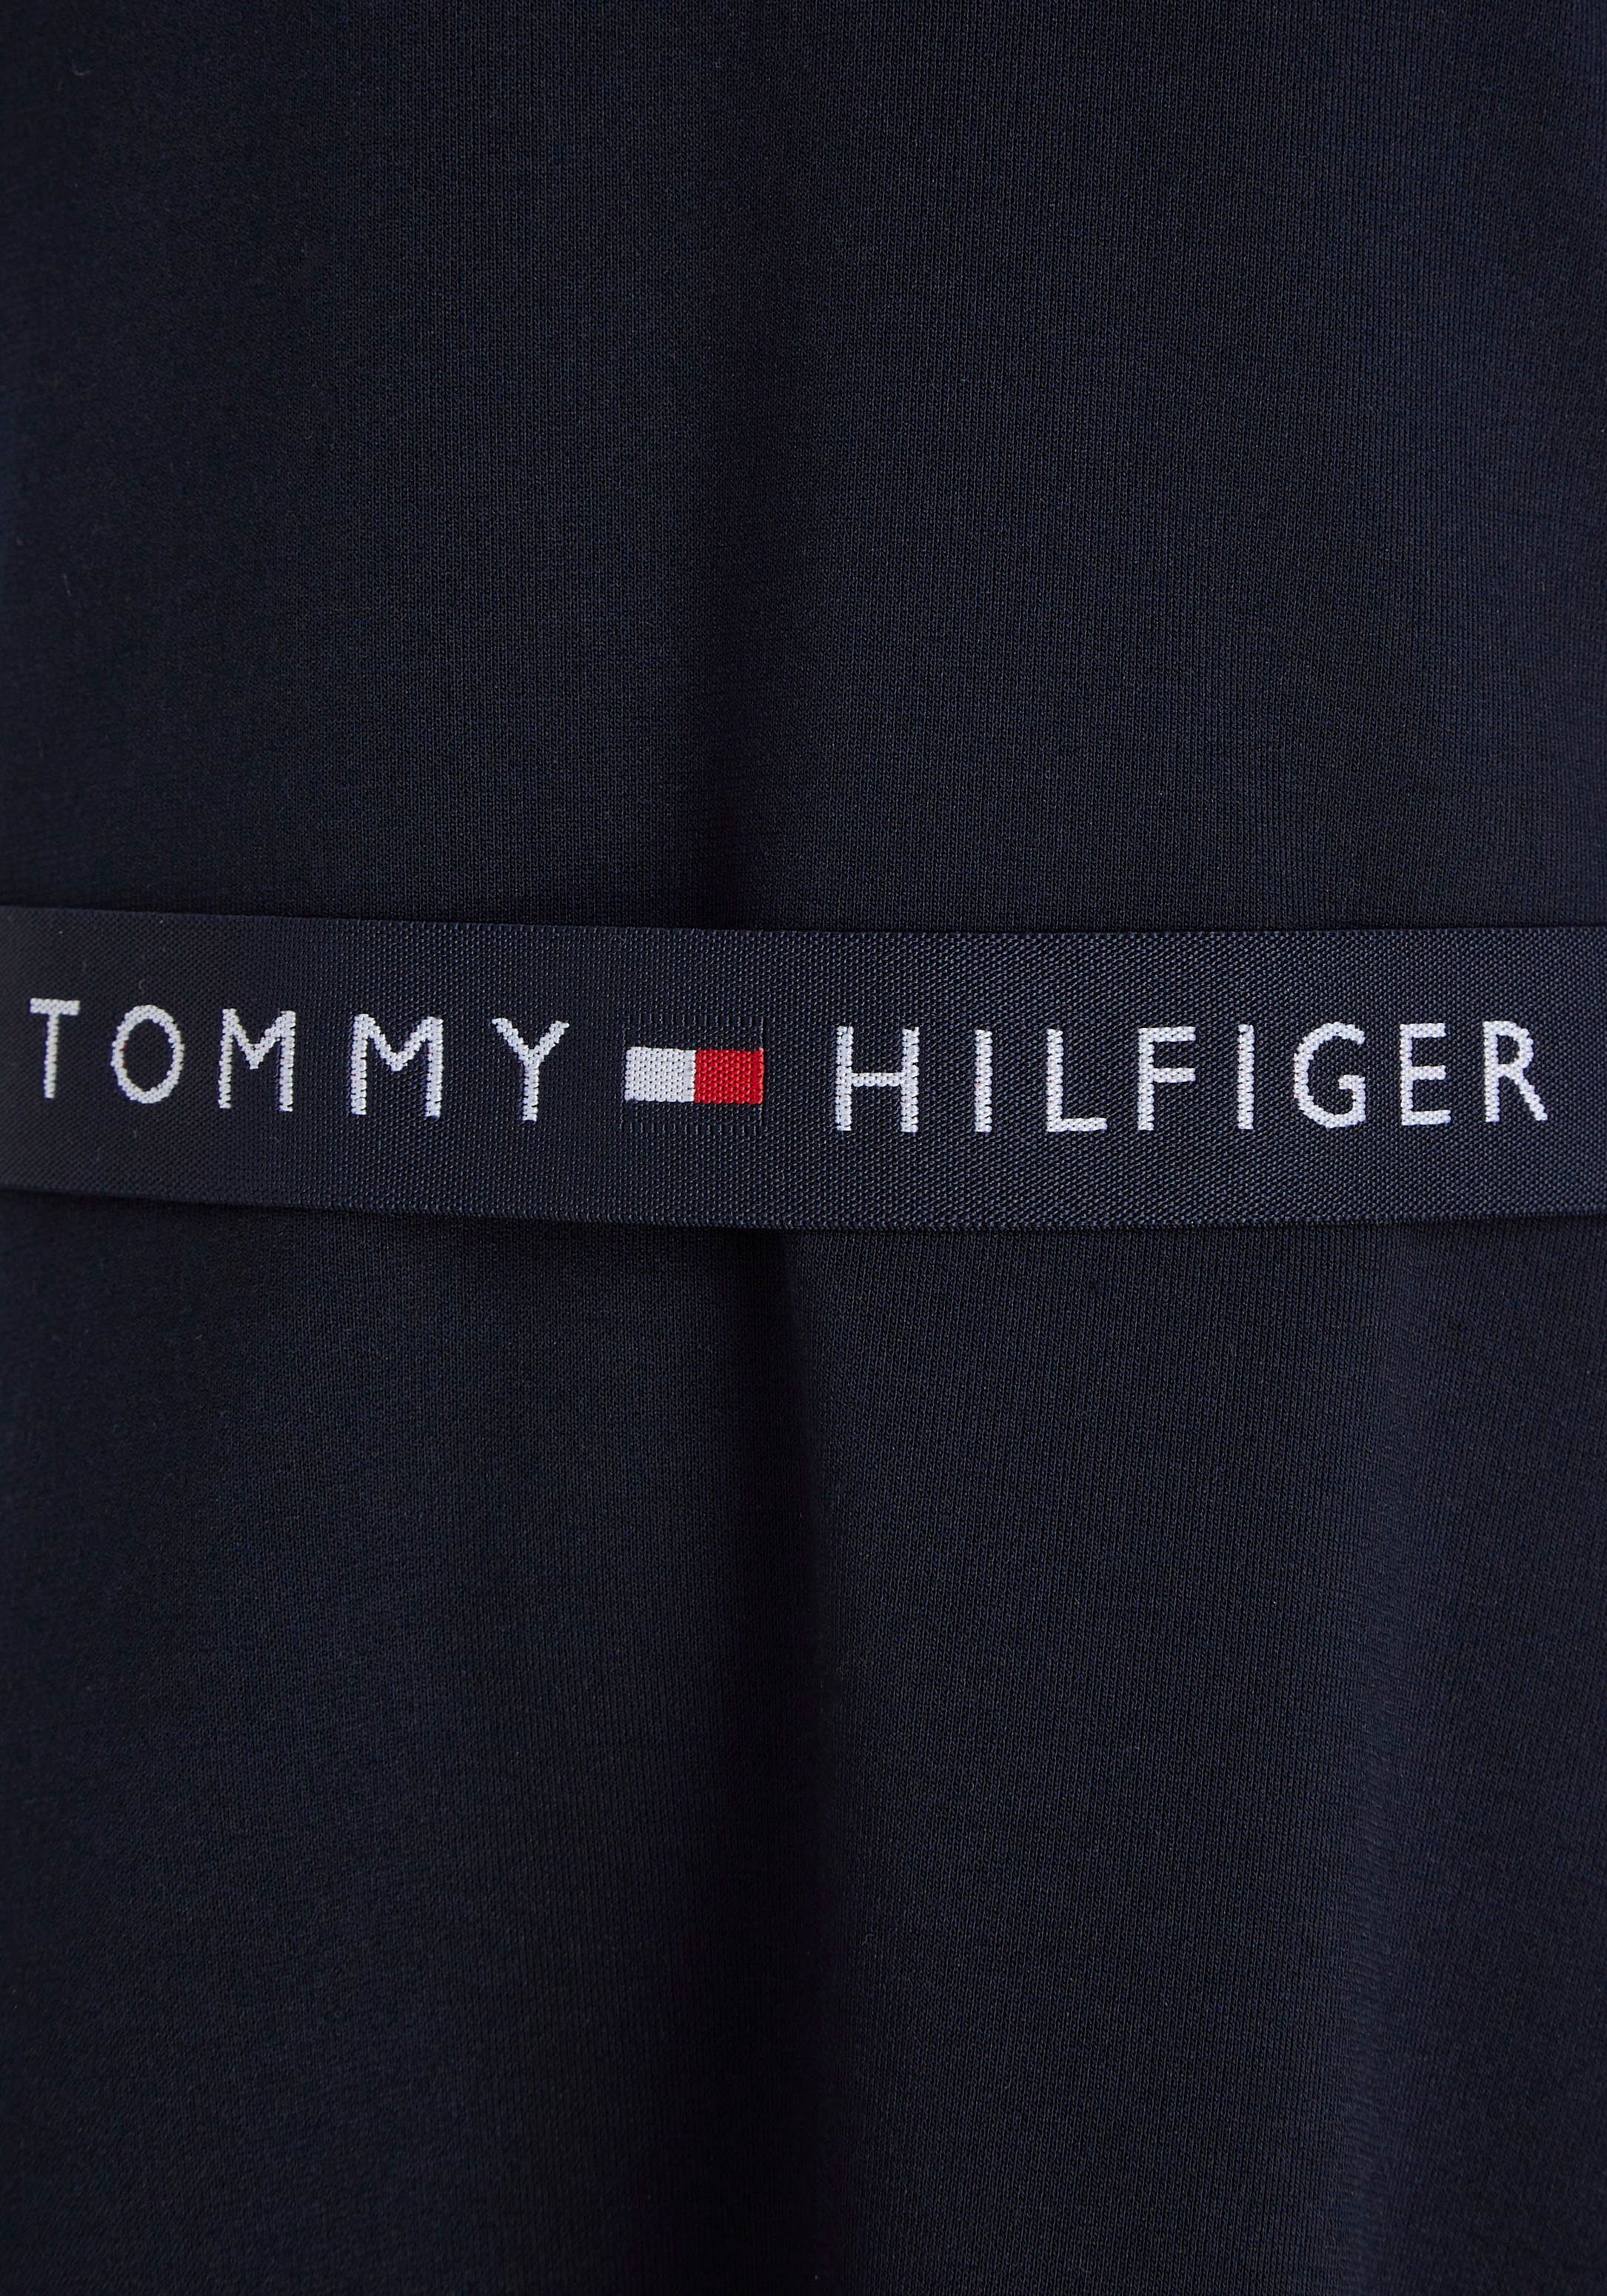 Babys Jerseykleid Tommy Hilfiger Desert DRESS 2 Jahre bis SKATER ESSENTIAL Sky